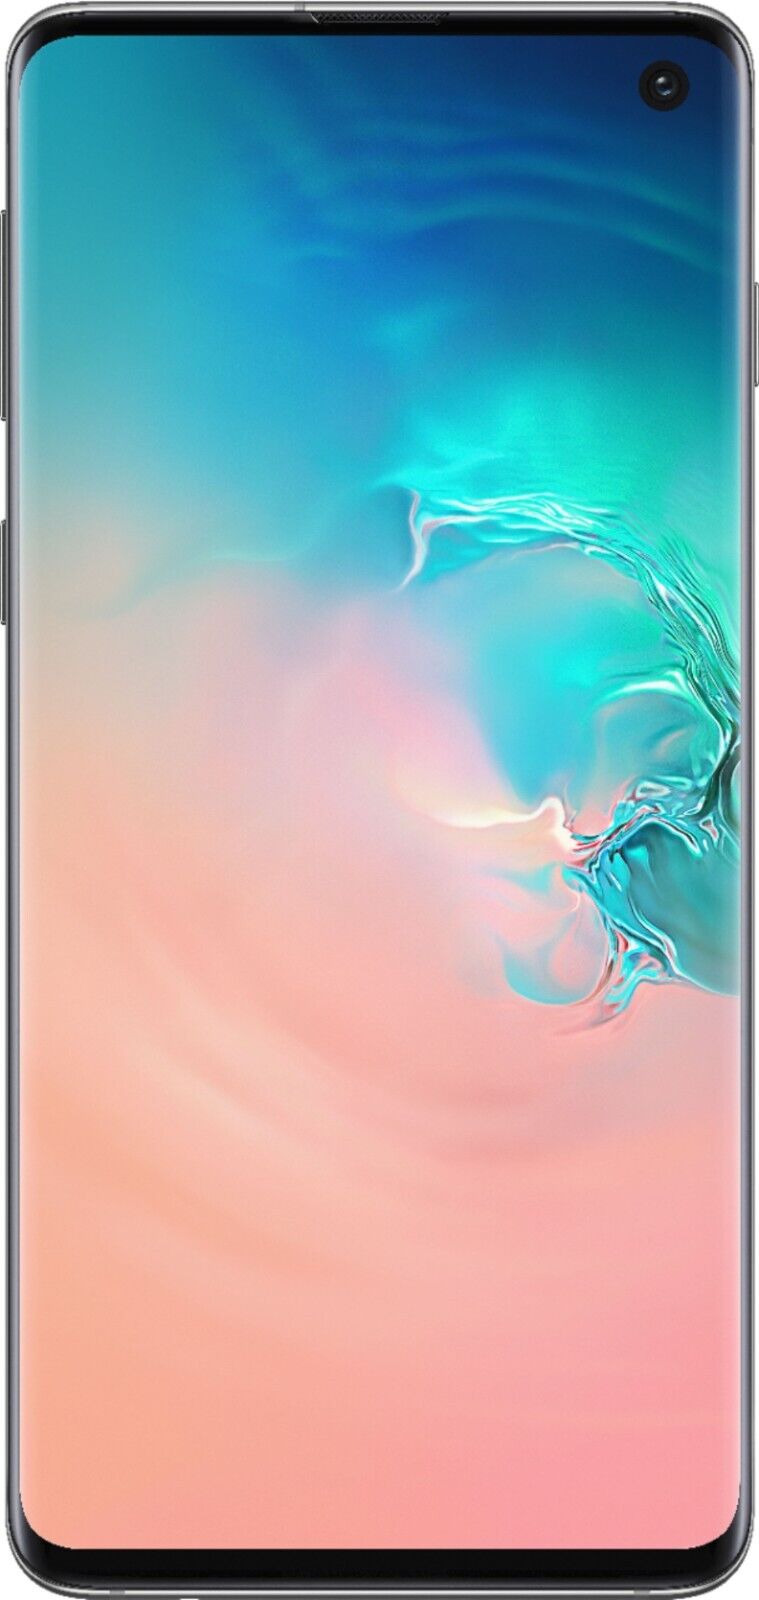 Galaxy S10 512GB - Prism White - Fully unlocked (GSM & CDMA)